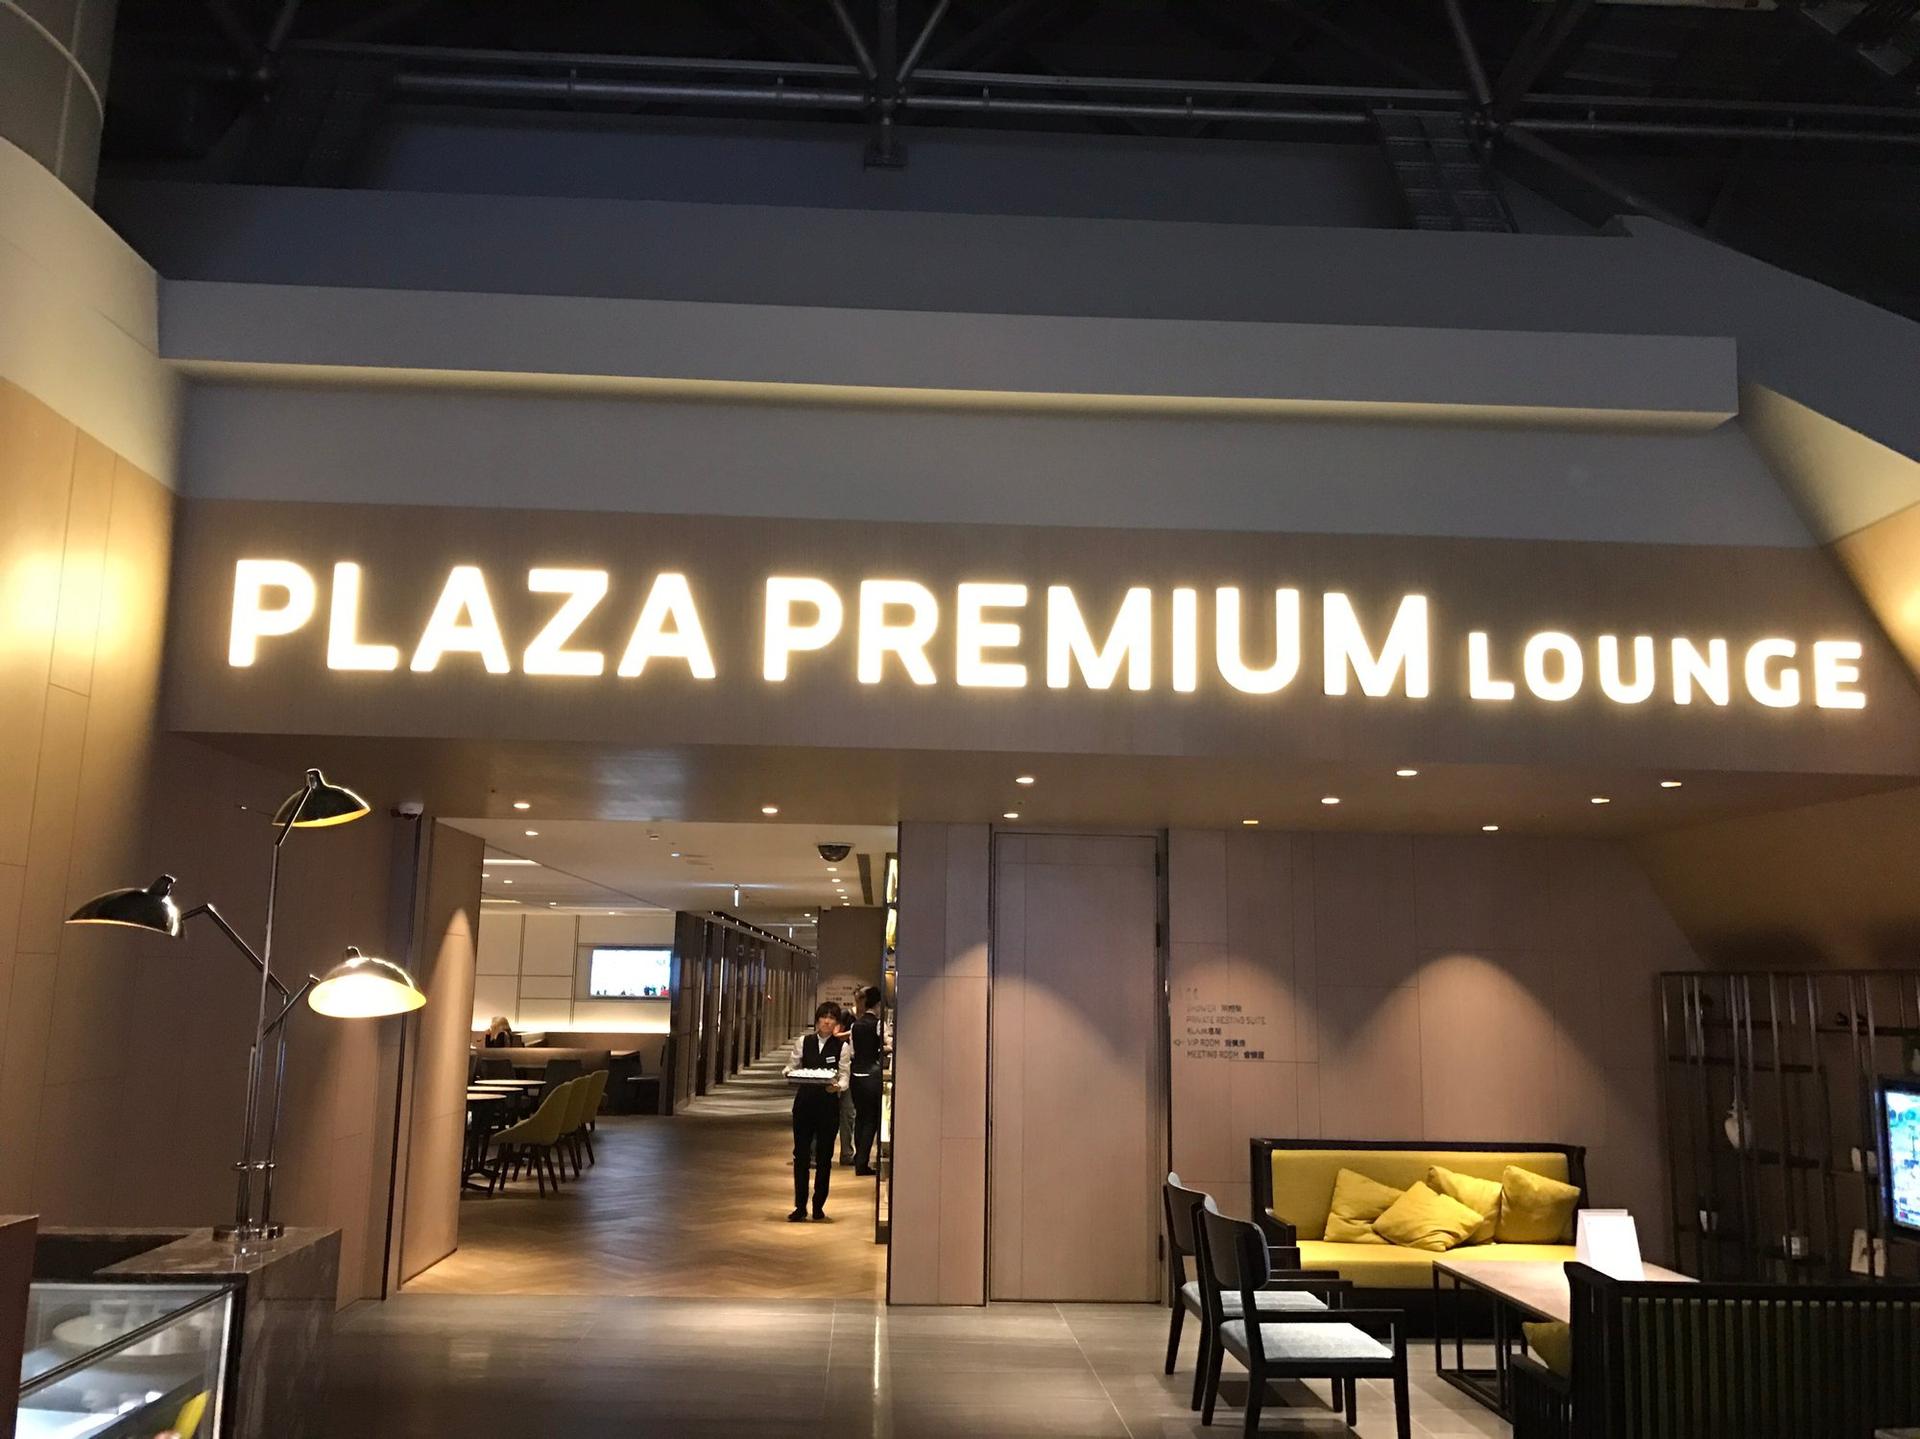 Plaza Premium Lounge (Zone A) image 79 of 99